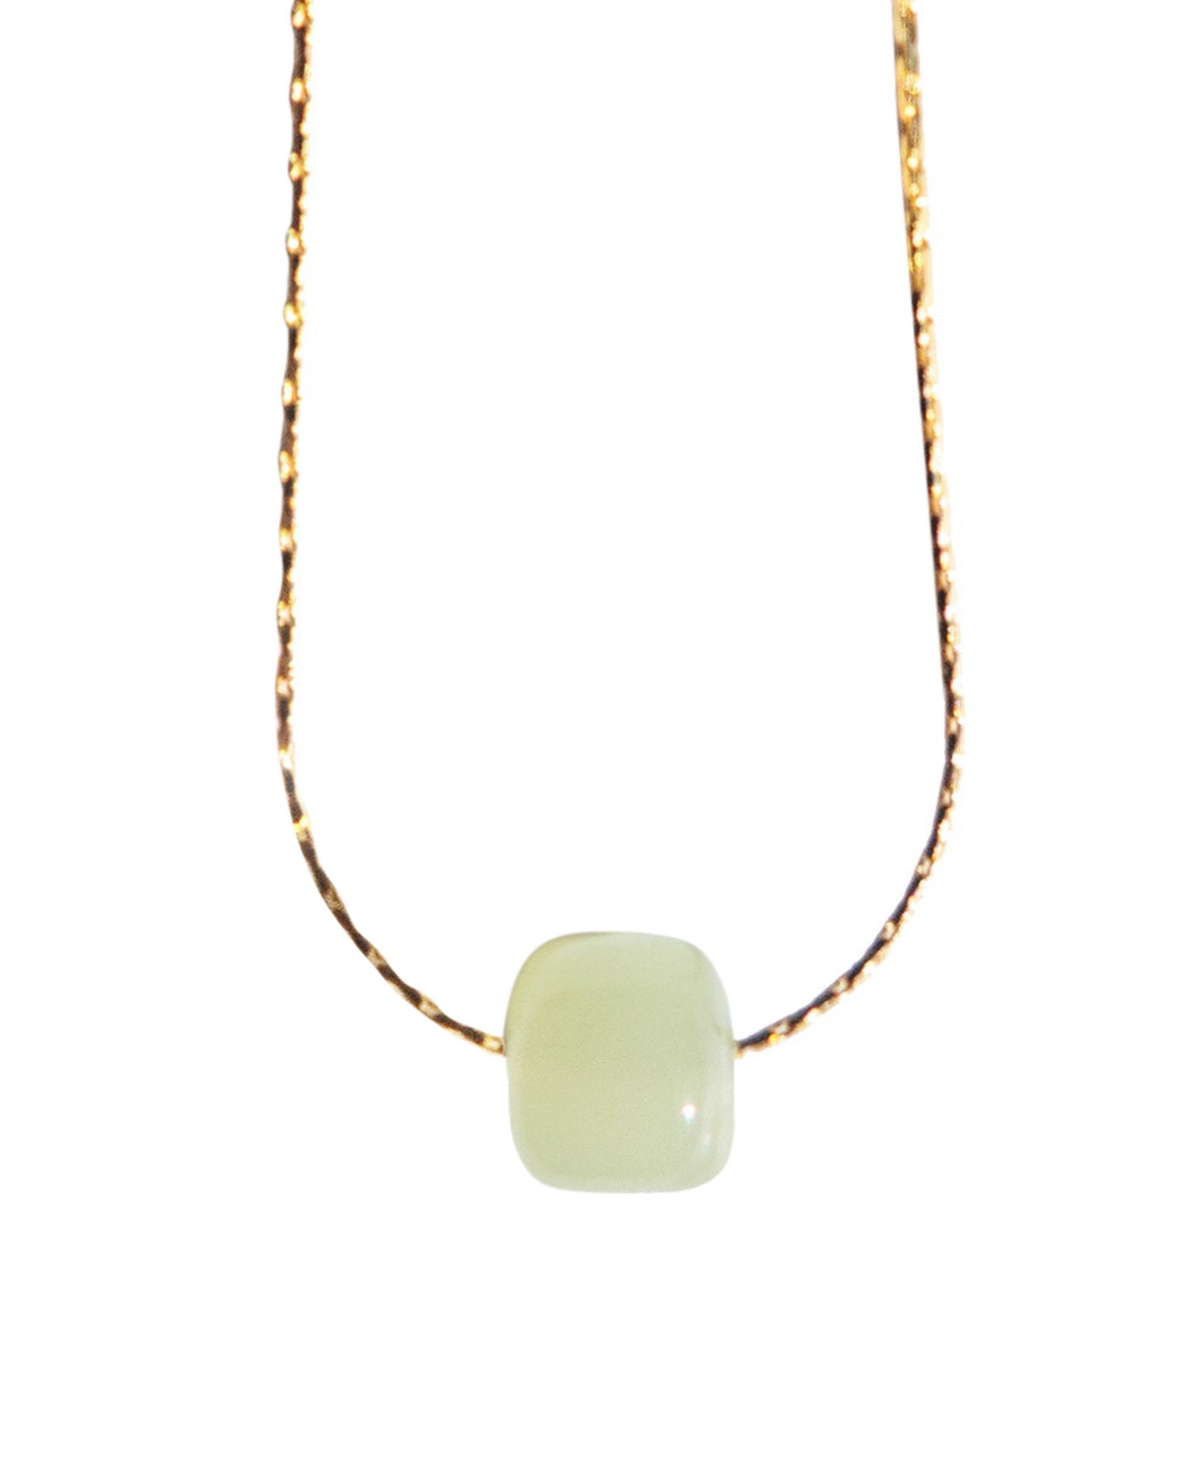 Beetle - Green bead jade necklace - Light/pastel green